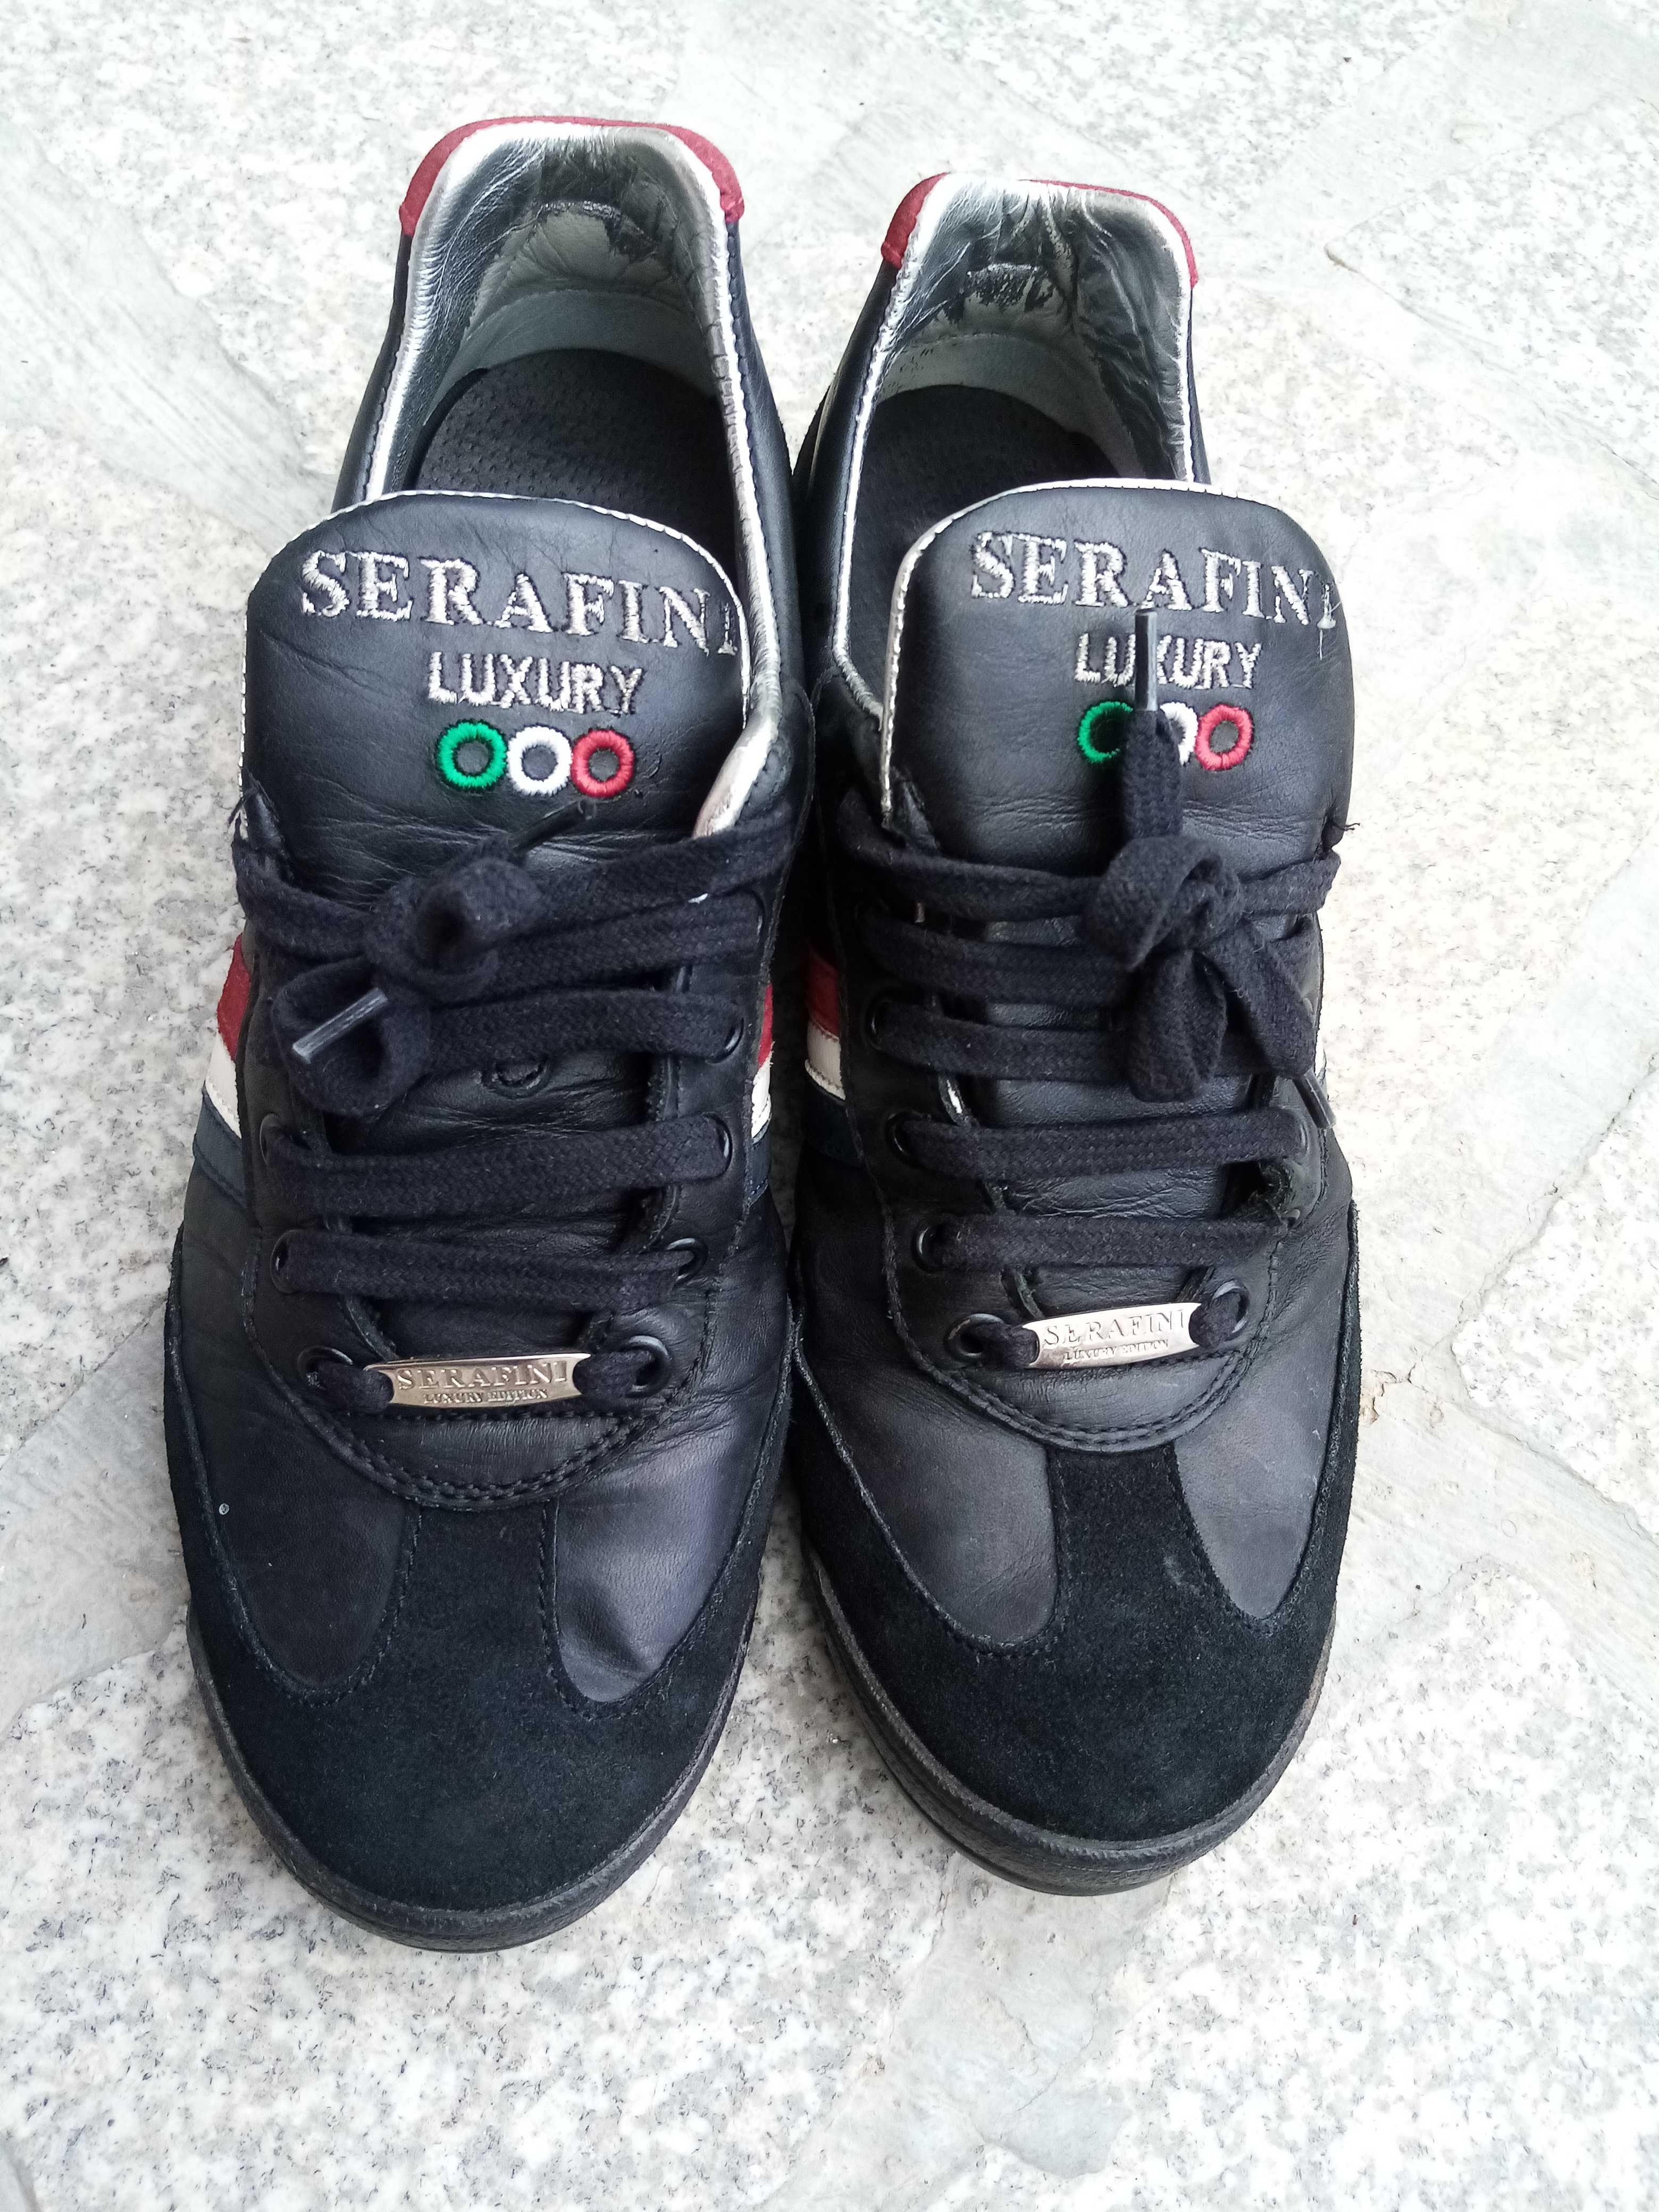 Sapato italliano Serafini